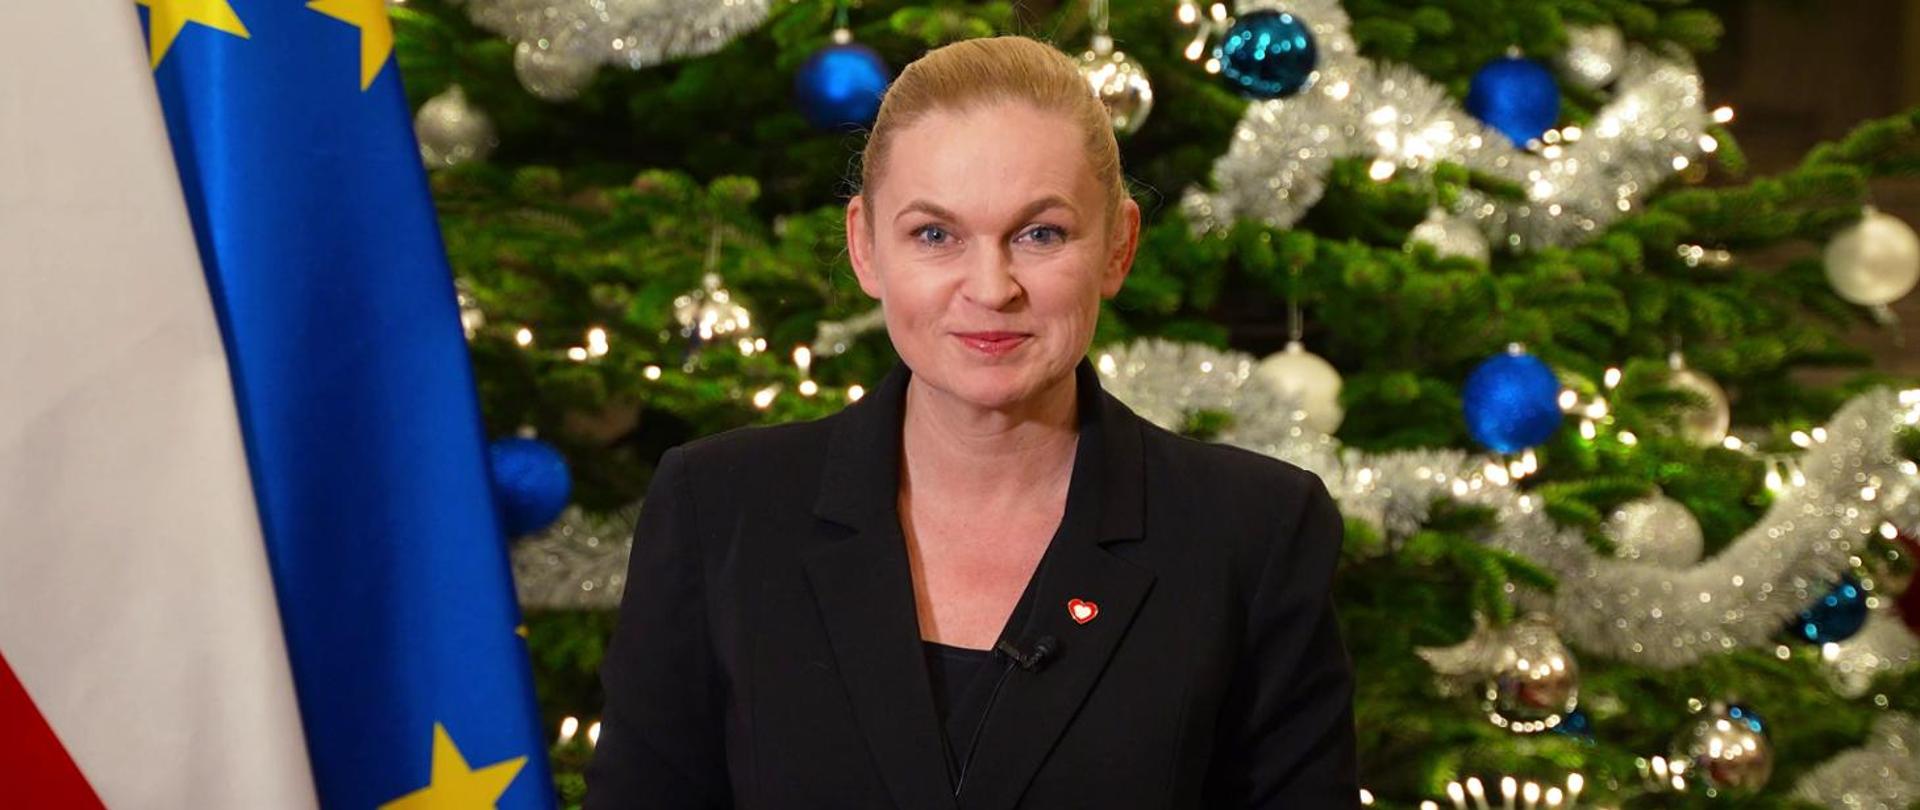 Ministra Barbara Nowacka stoi na tle udekorowanej bombkami choinki.